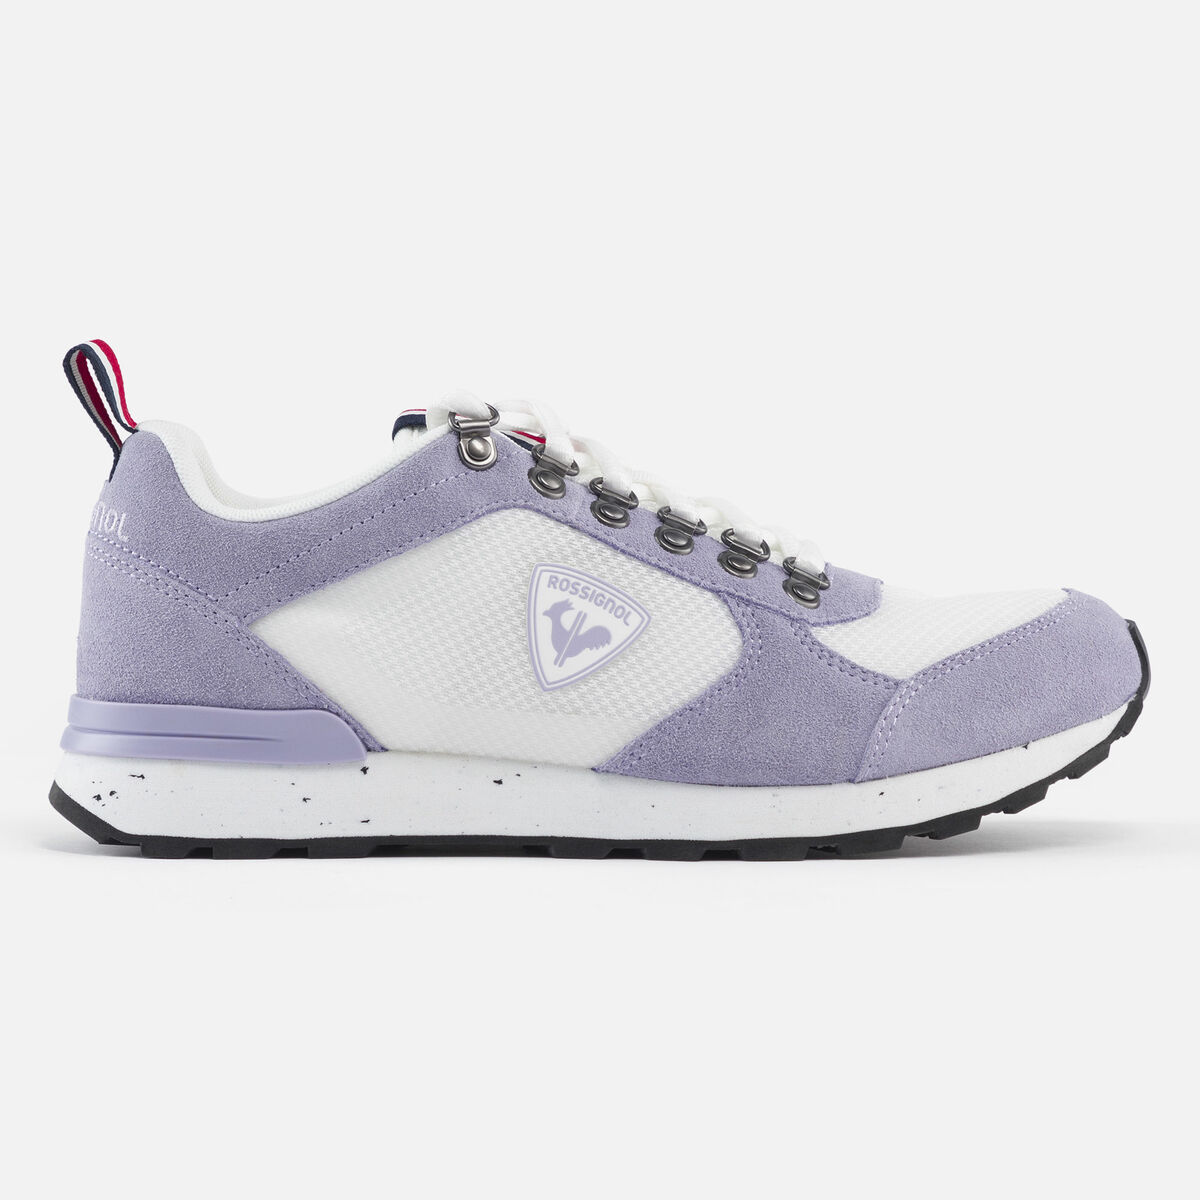 Rossignol Women's Heritage Special lavender sneakers Pink/Purple